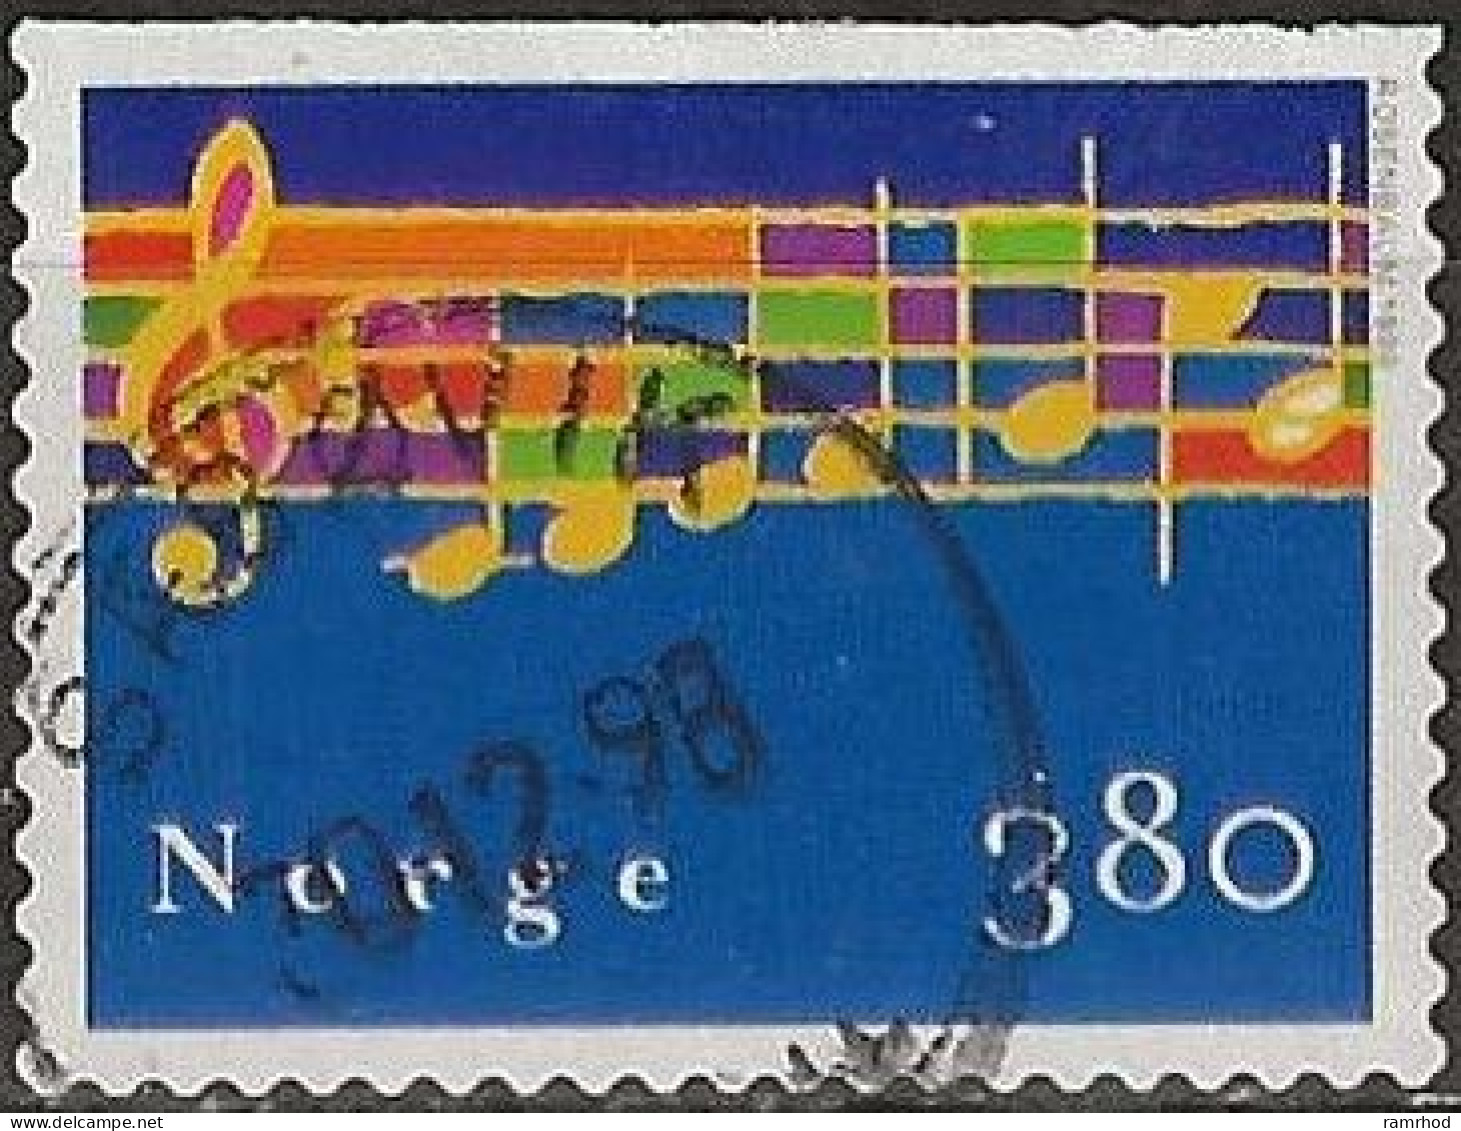 NORWAY 1998 Christmas - 3k.80 - Music Score (blue Background) FU - Gebraucht